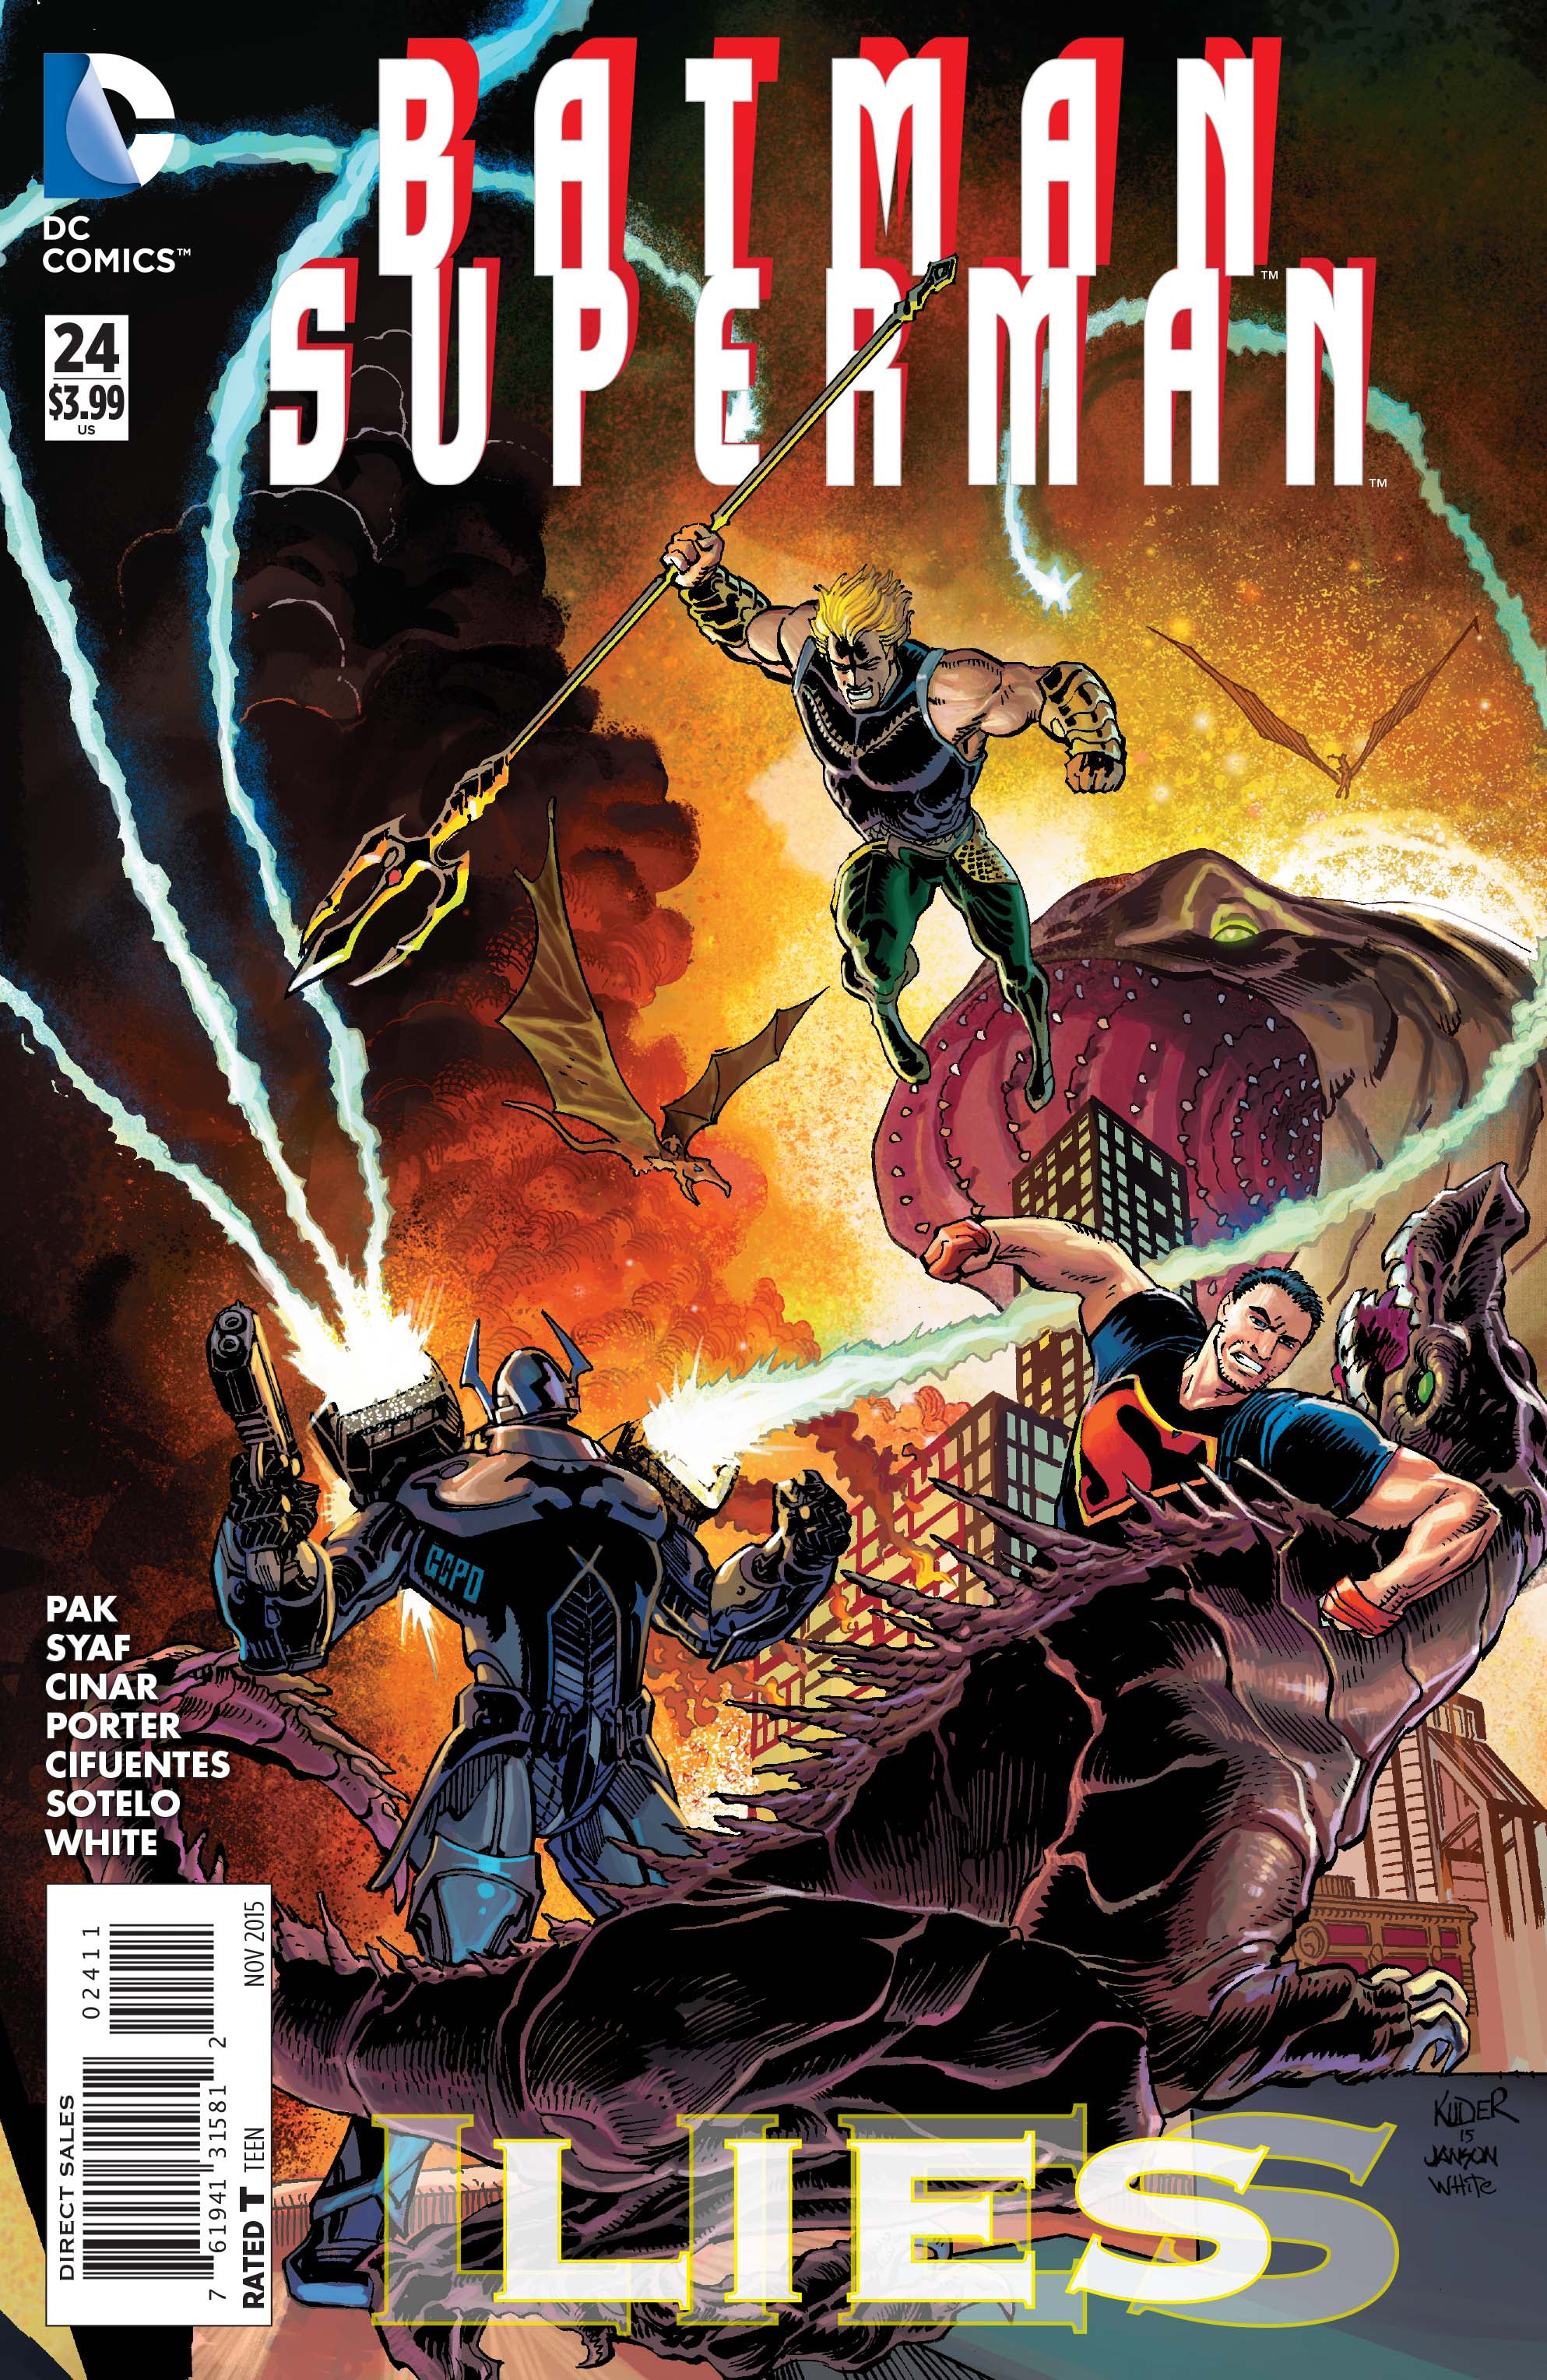 BATMAN SUPERMAN #24 | Game Master's Emporium (The New GME)